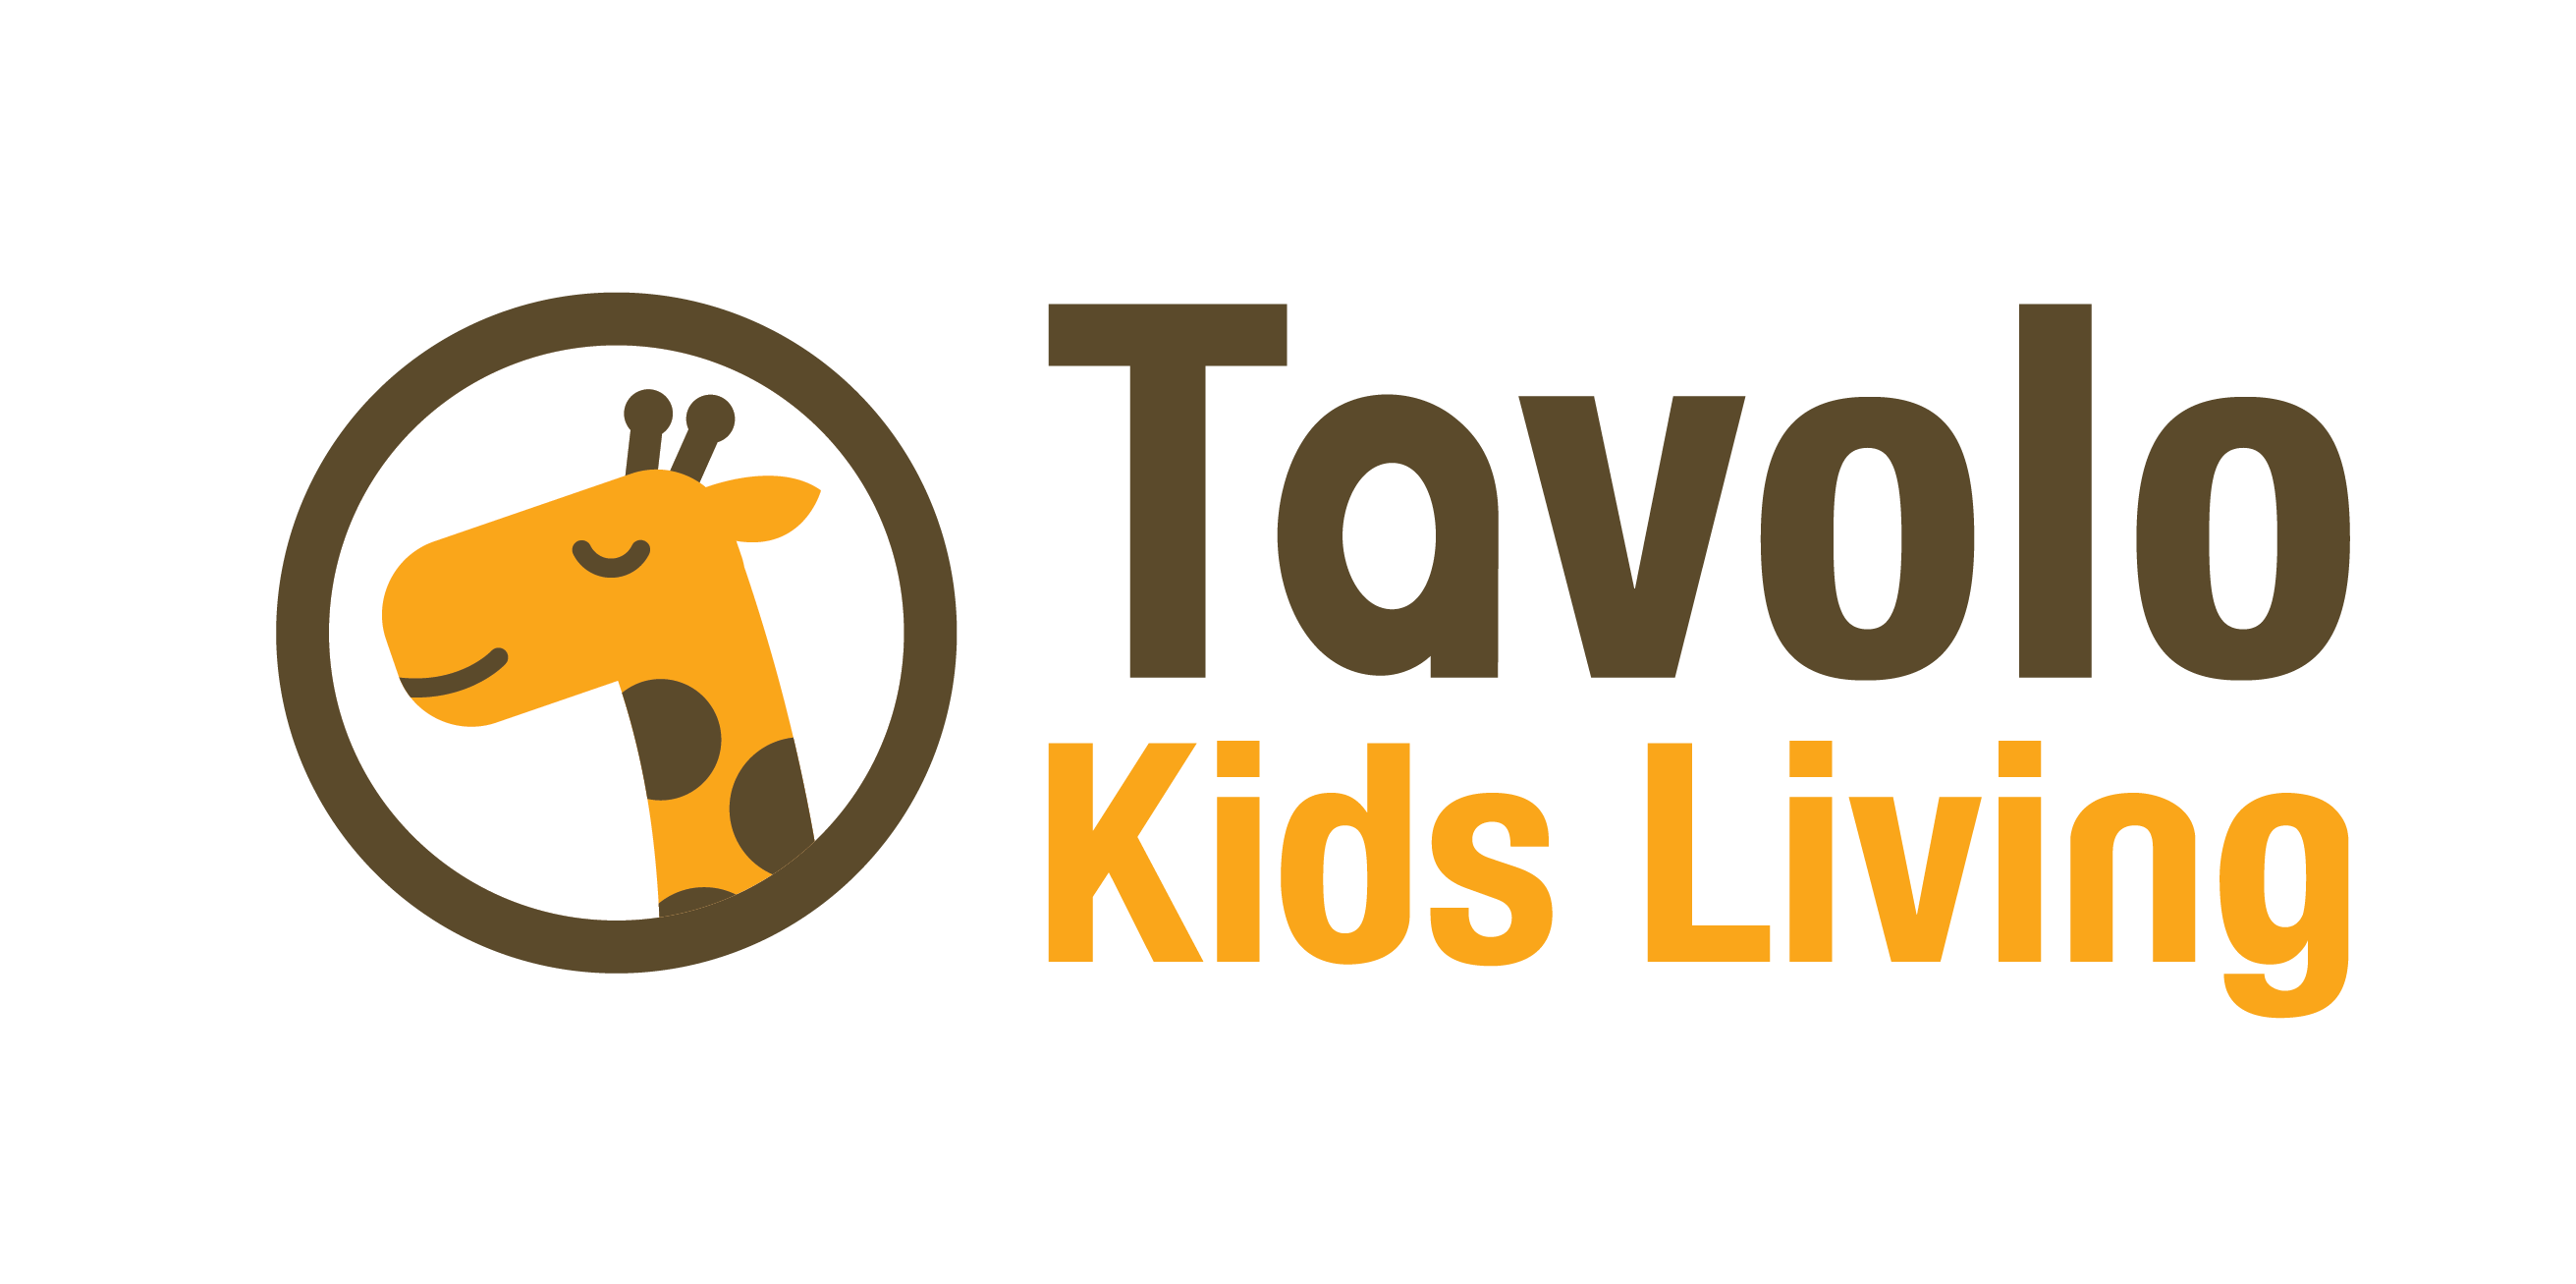 Tavolo Kids Living